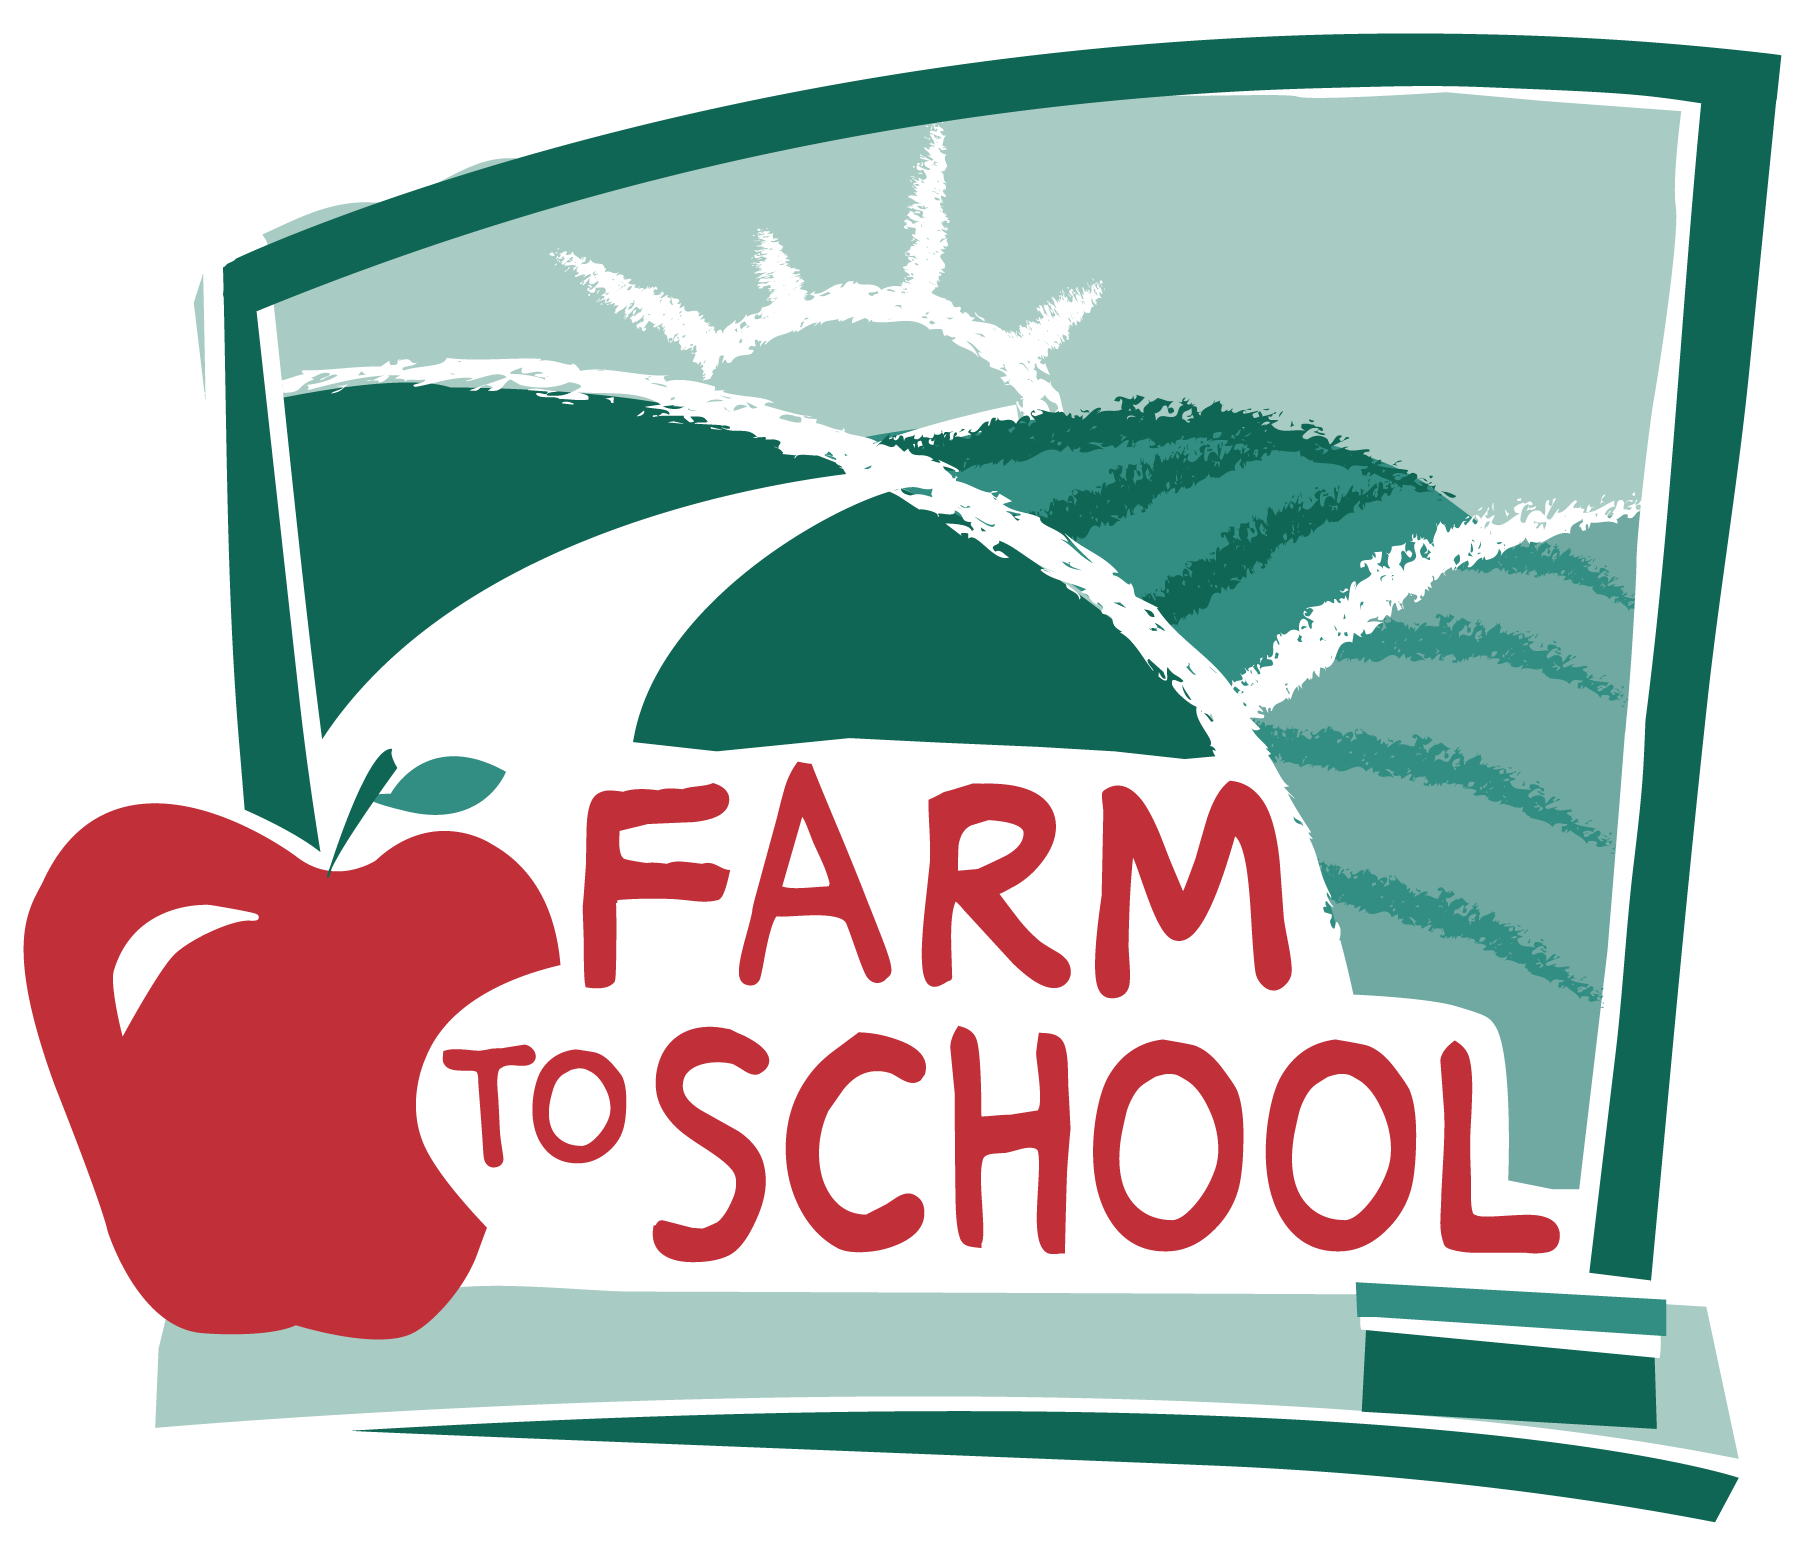 Farm To School Logo - Farm To School Program (1812x1567)